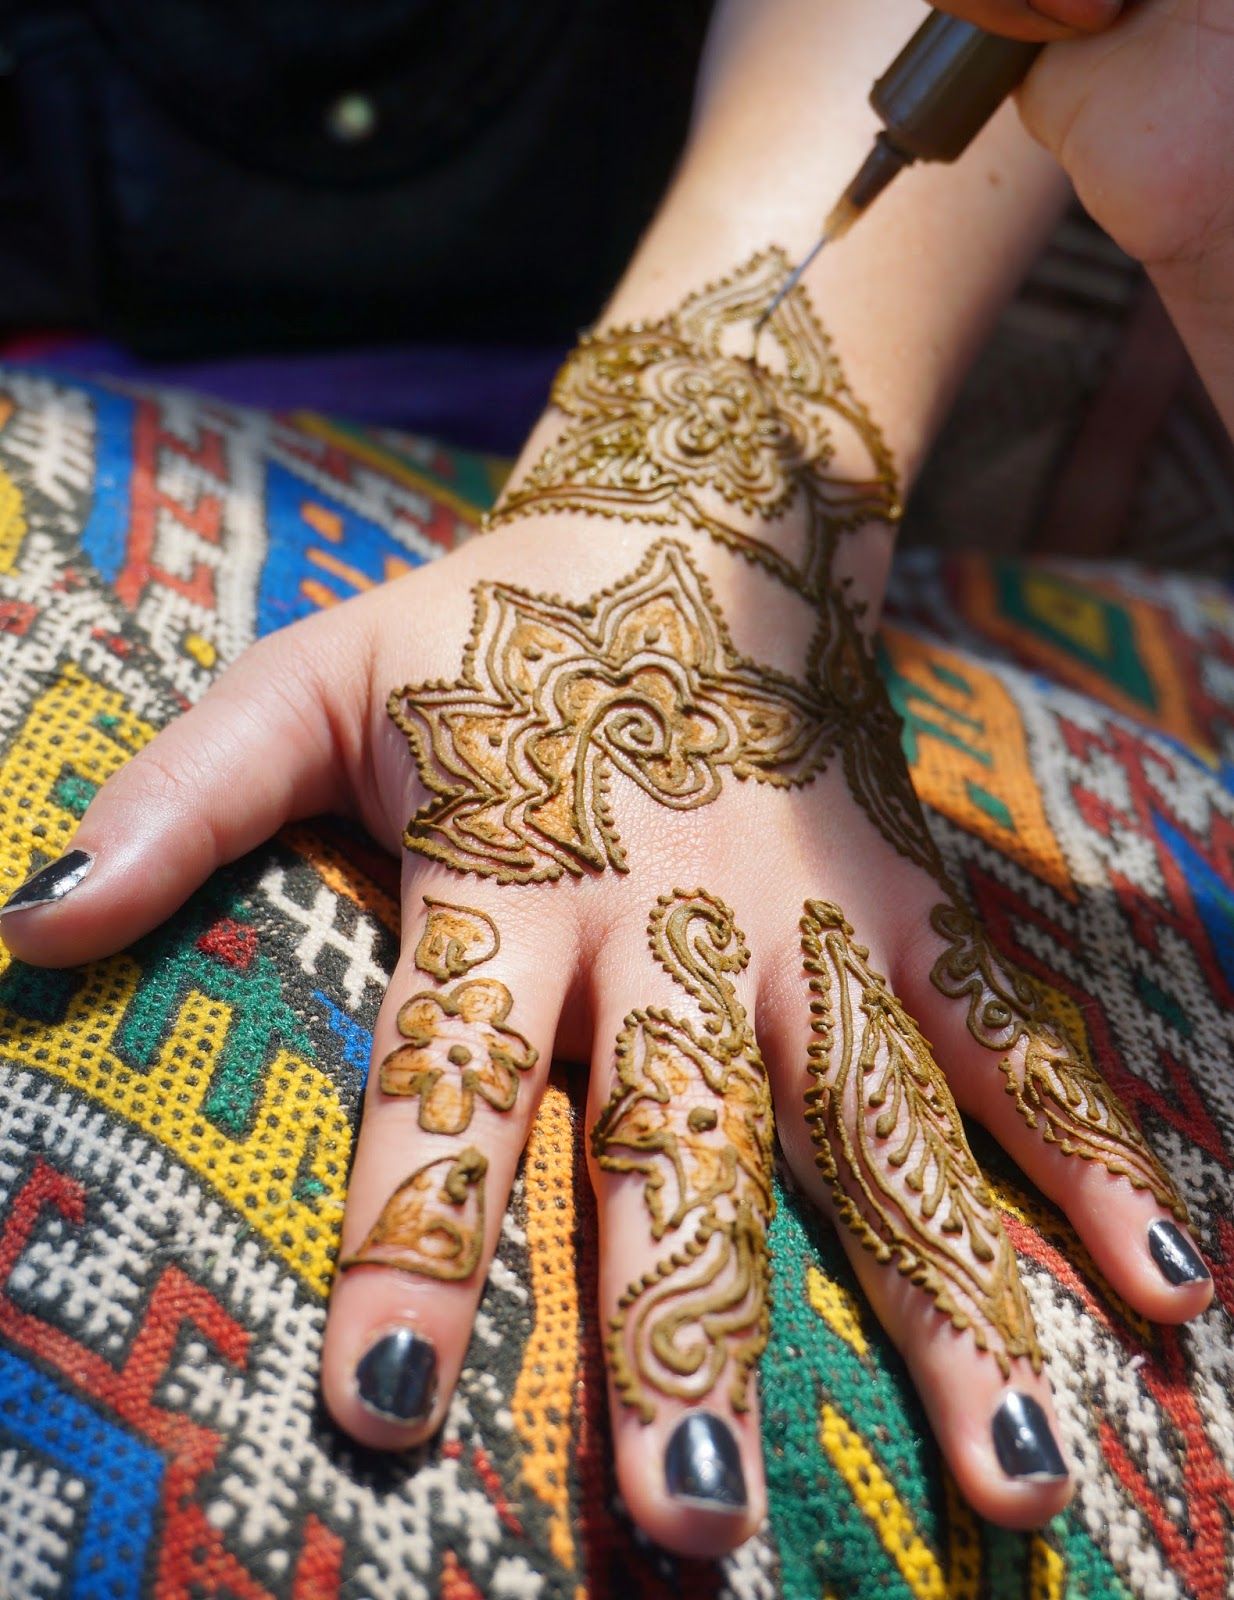 Eshkol HaKofer: Hey Hannaya: A Moroccan Henna Artist in Action ...